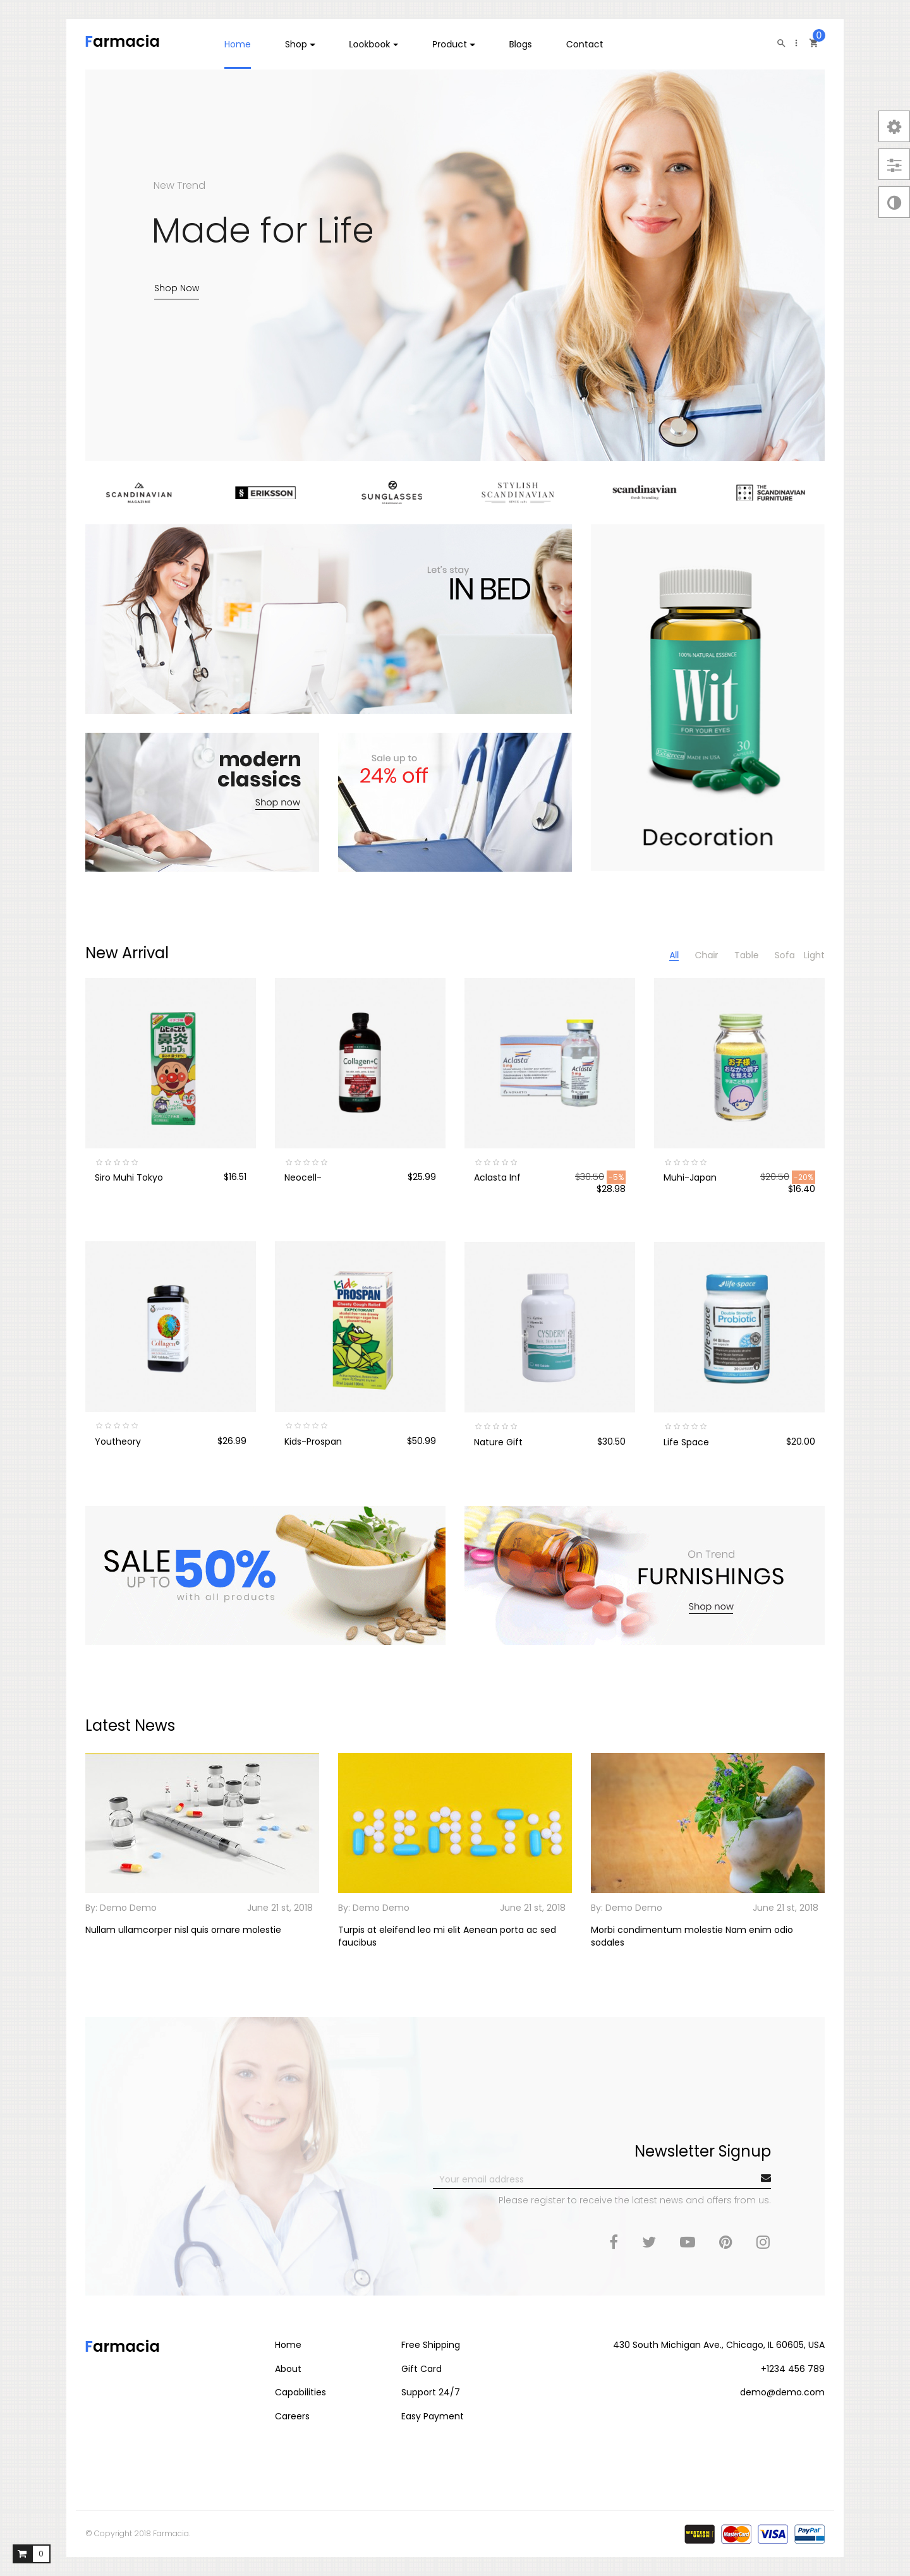 Mẫu giao diện website Dược phẩm Farmacia